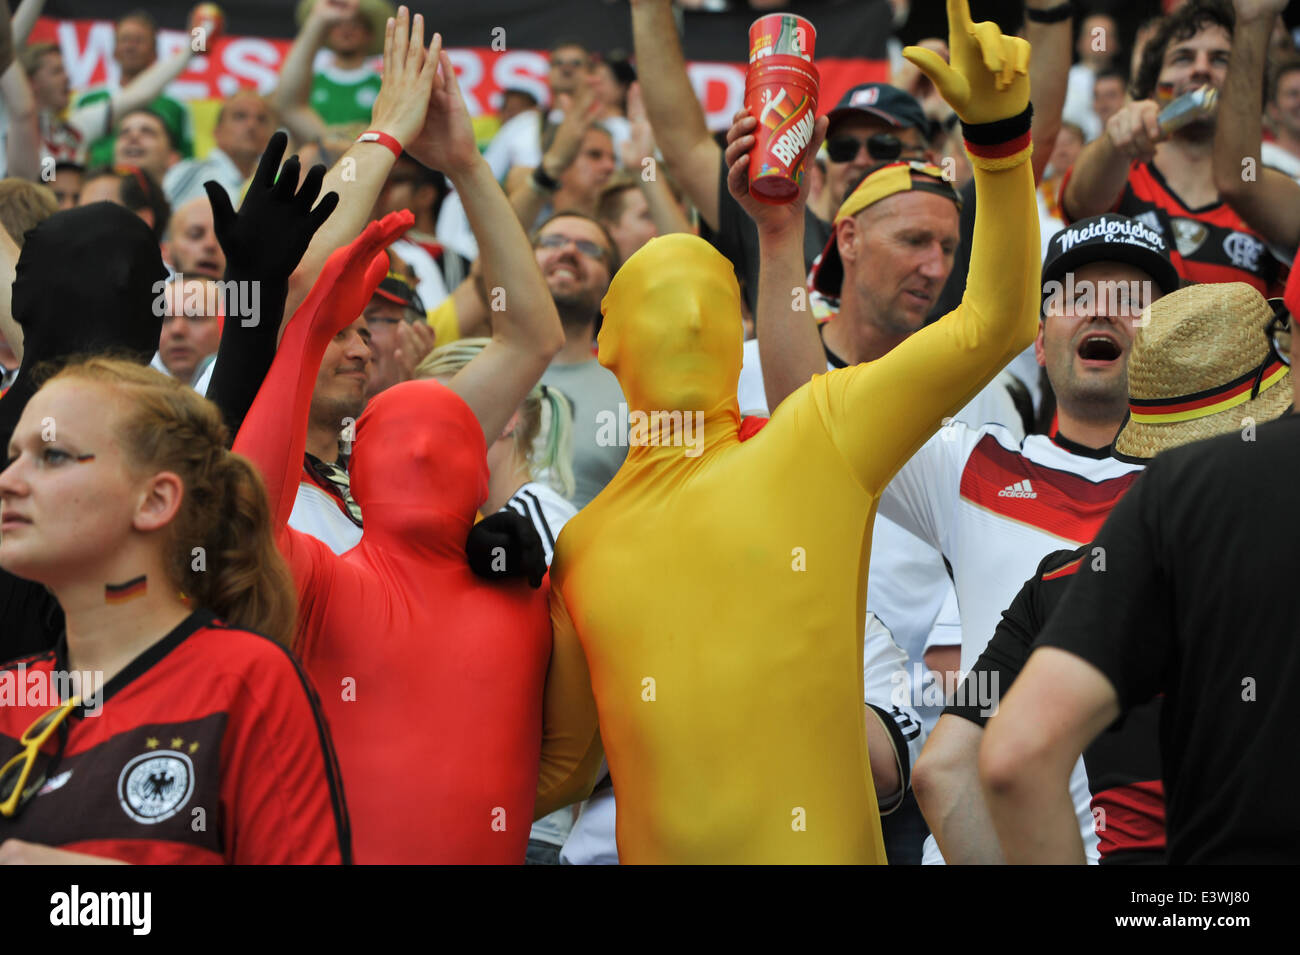 WM 2014, Salvador da Bahia, deutsche Fans feiern nach dem Spiel Deutschland vs Portugal (4:0). Usage éditorial uniquement. Banque D'Images